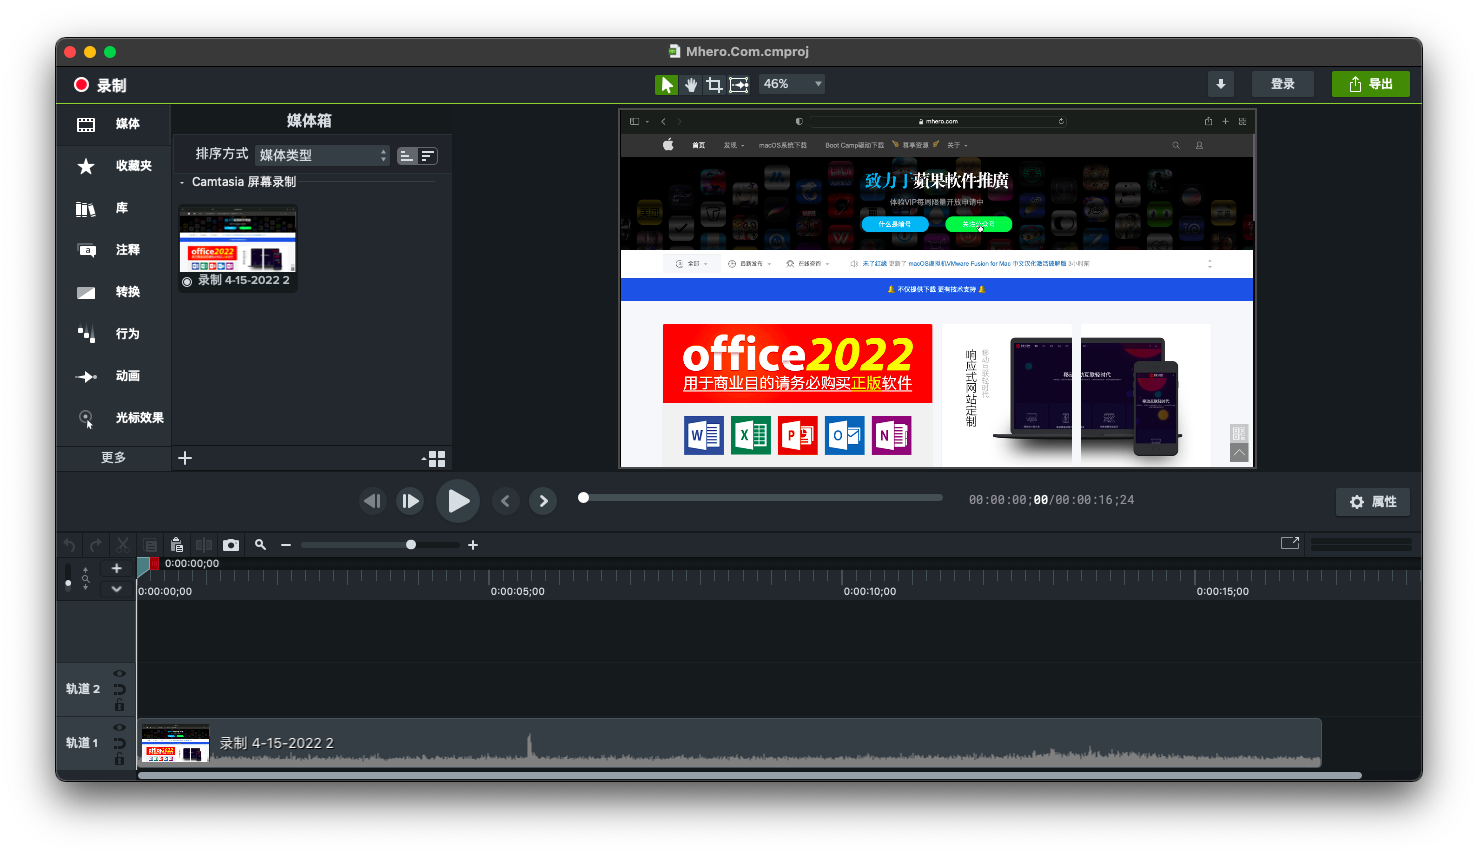 Camtasia For Mac - 屏幕录制项目编辑界面 - 媒体箱